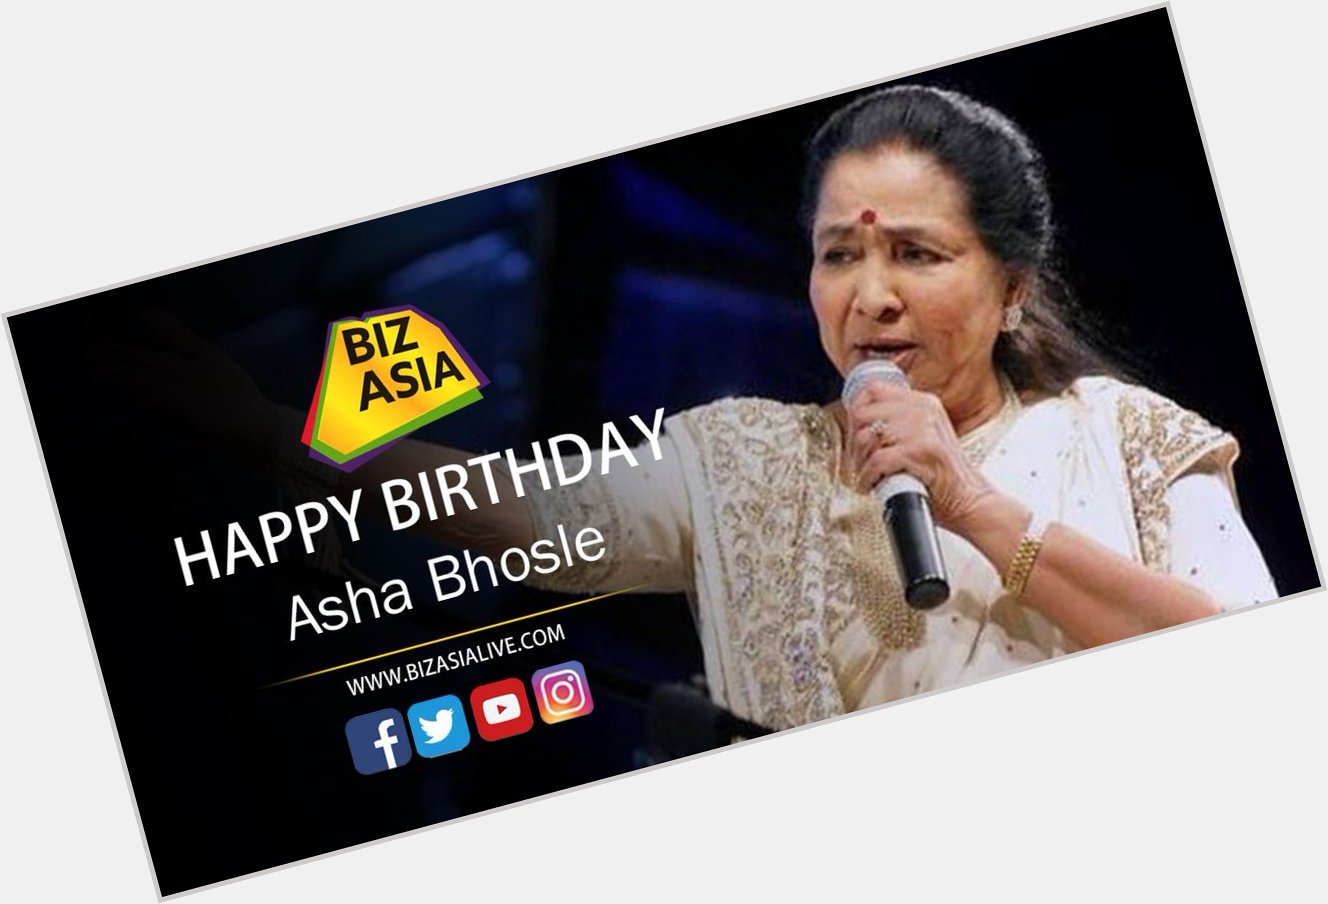  wishes Asha Bhosle a very happy birthday.  